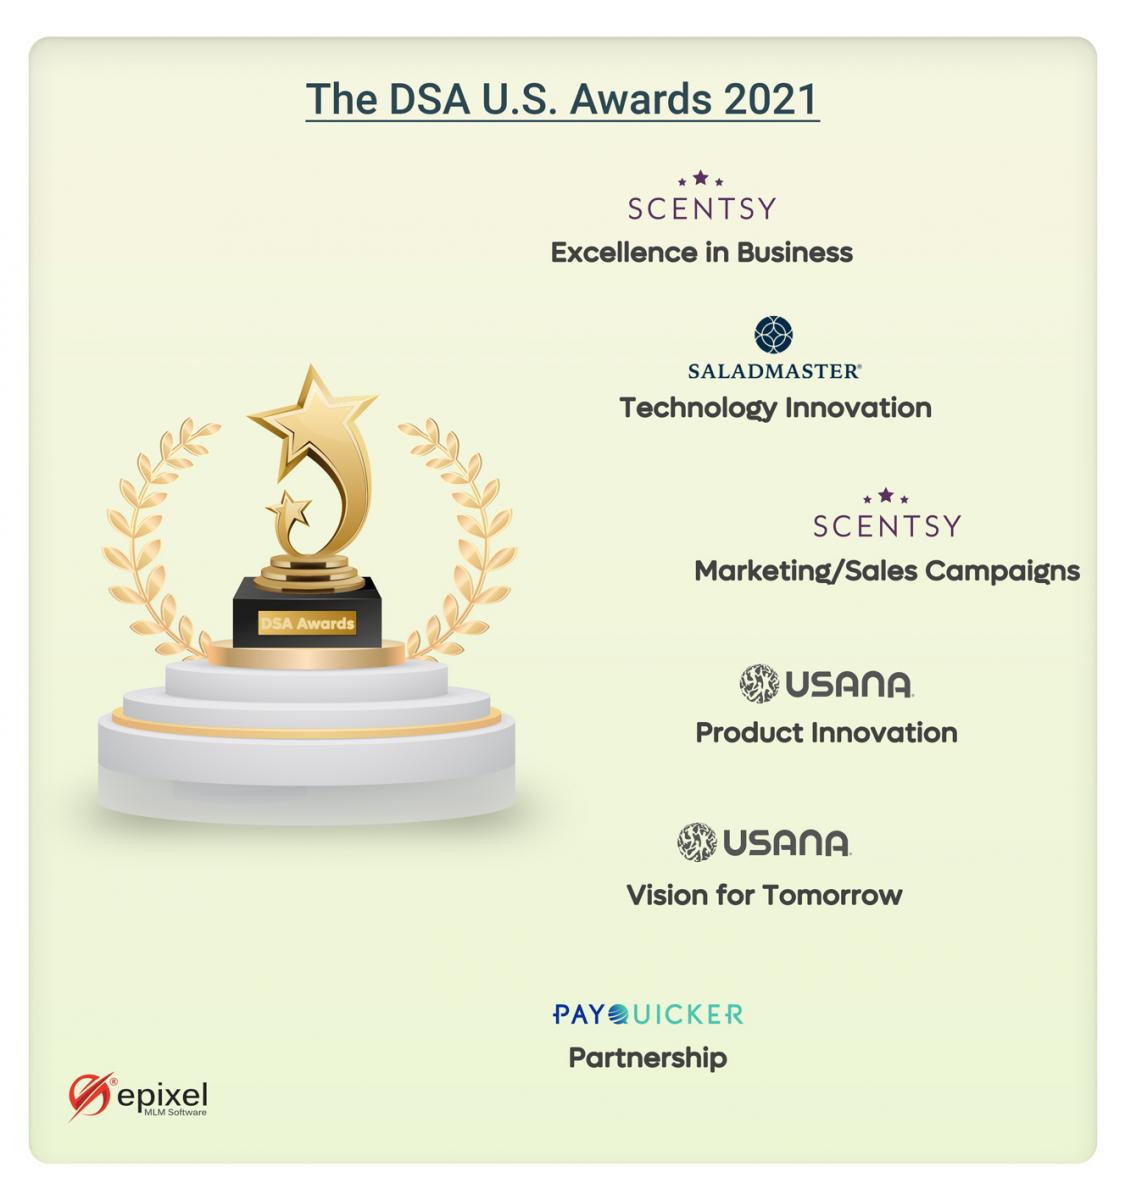 Graphical representation of the U.S. DSA awards 2021